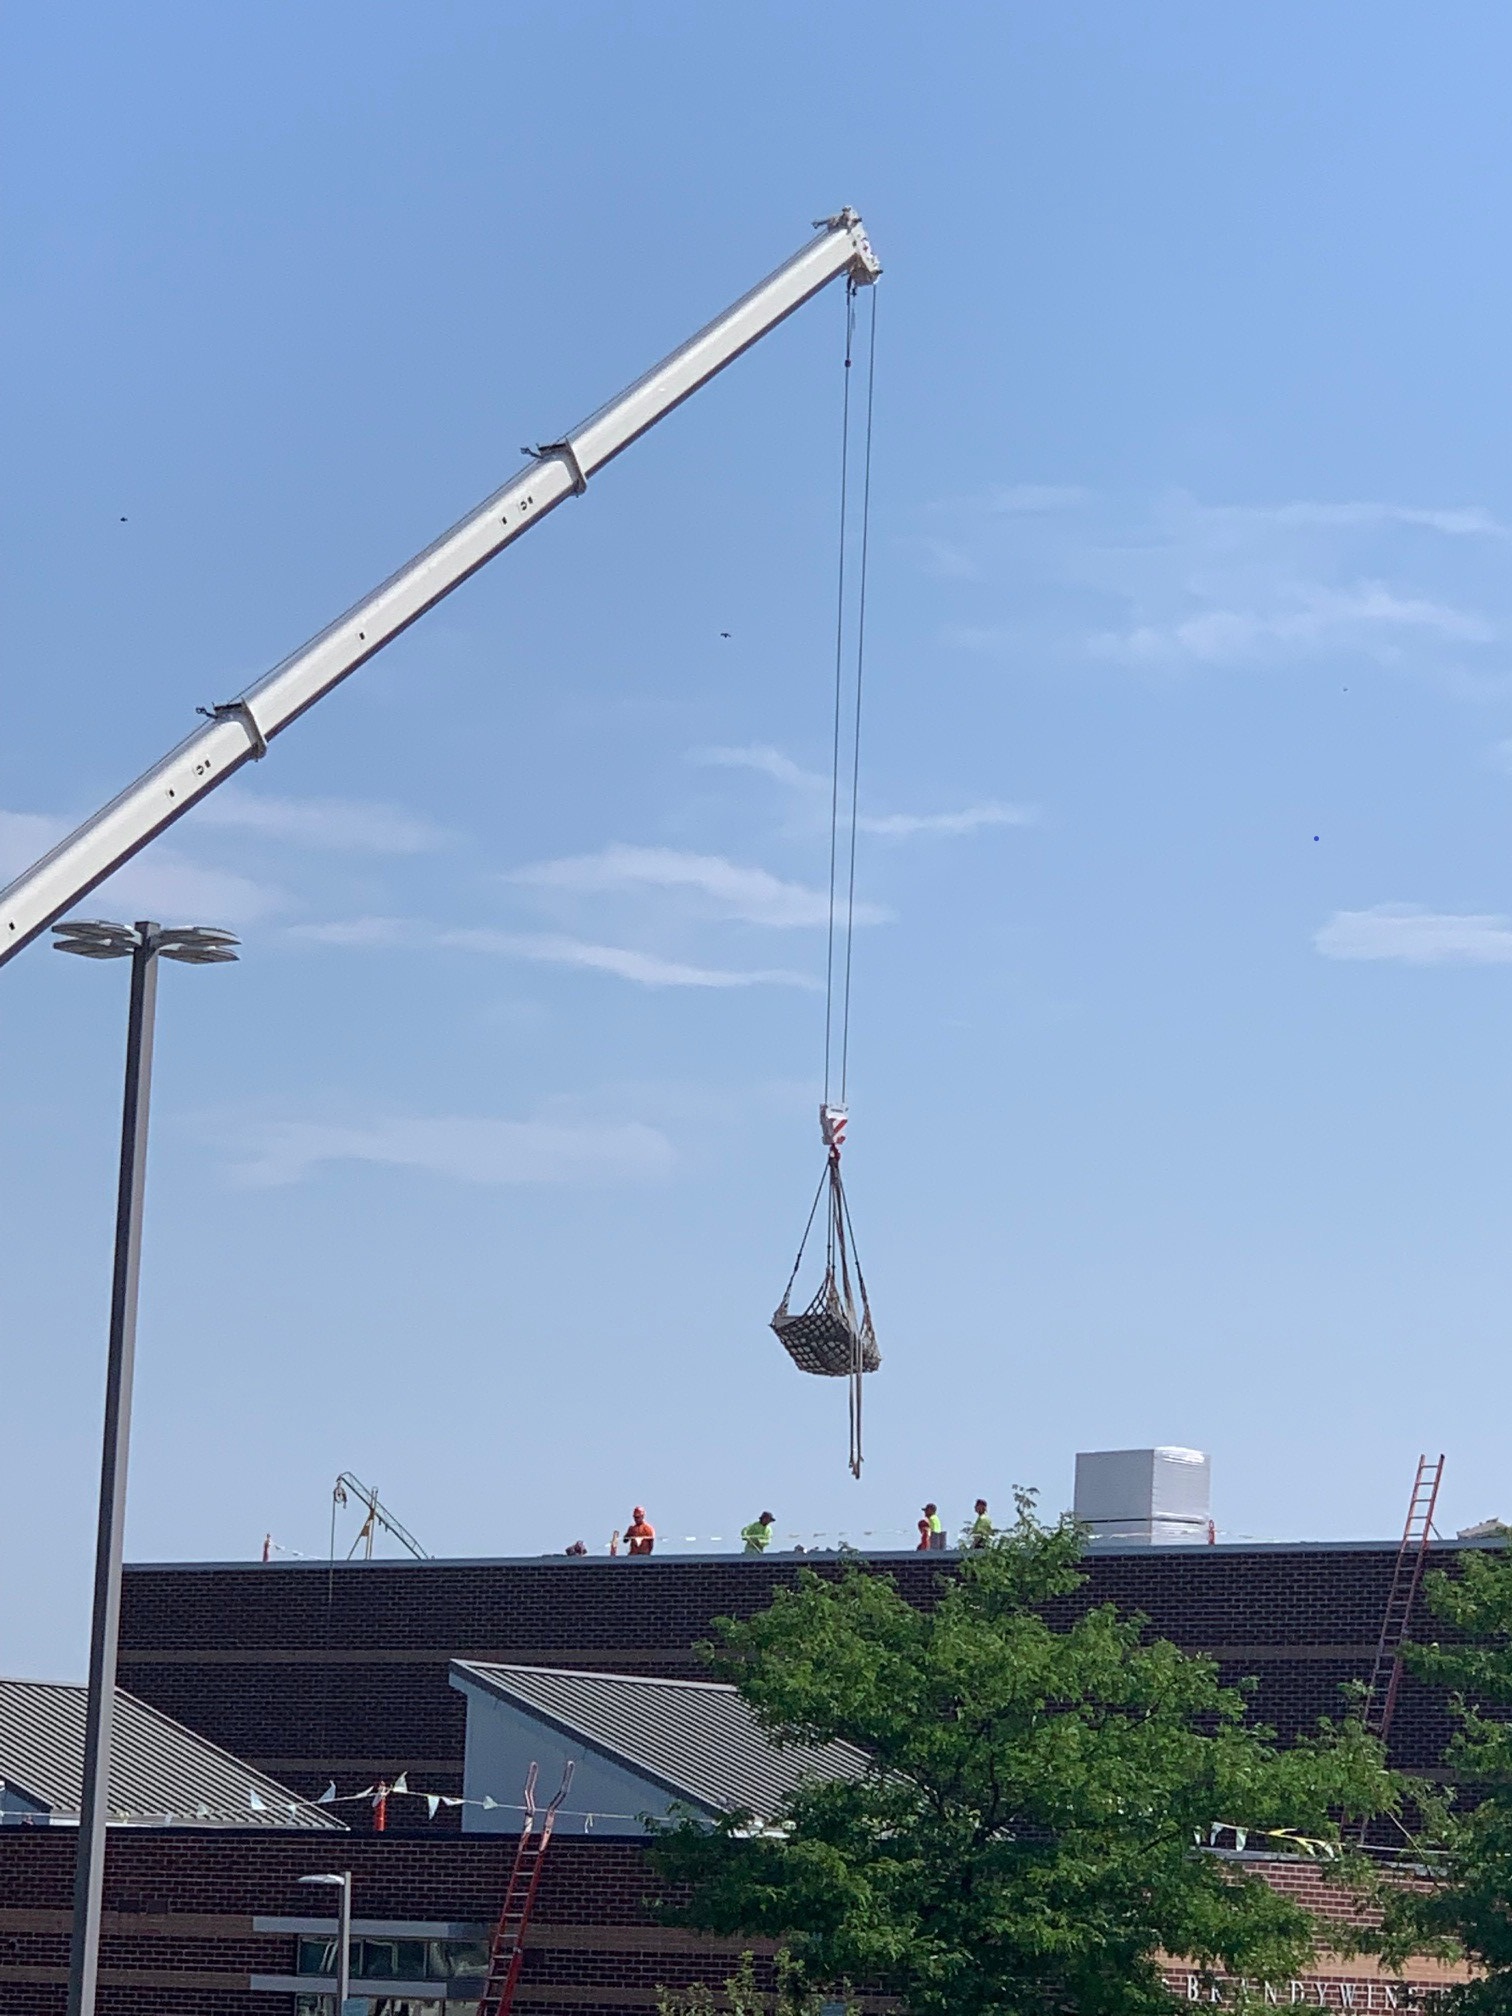 Construction crane